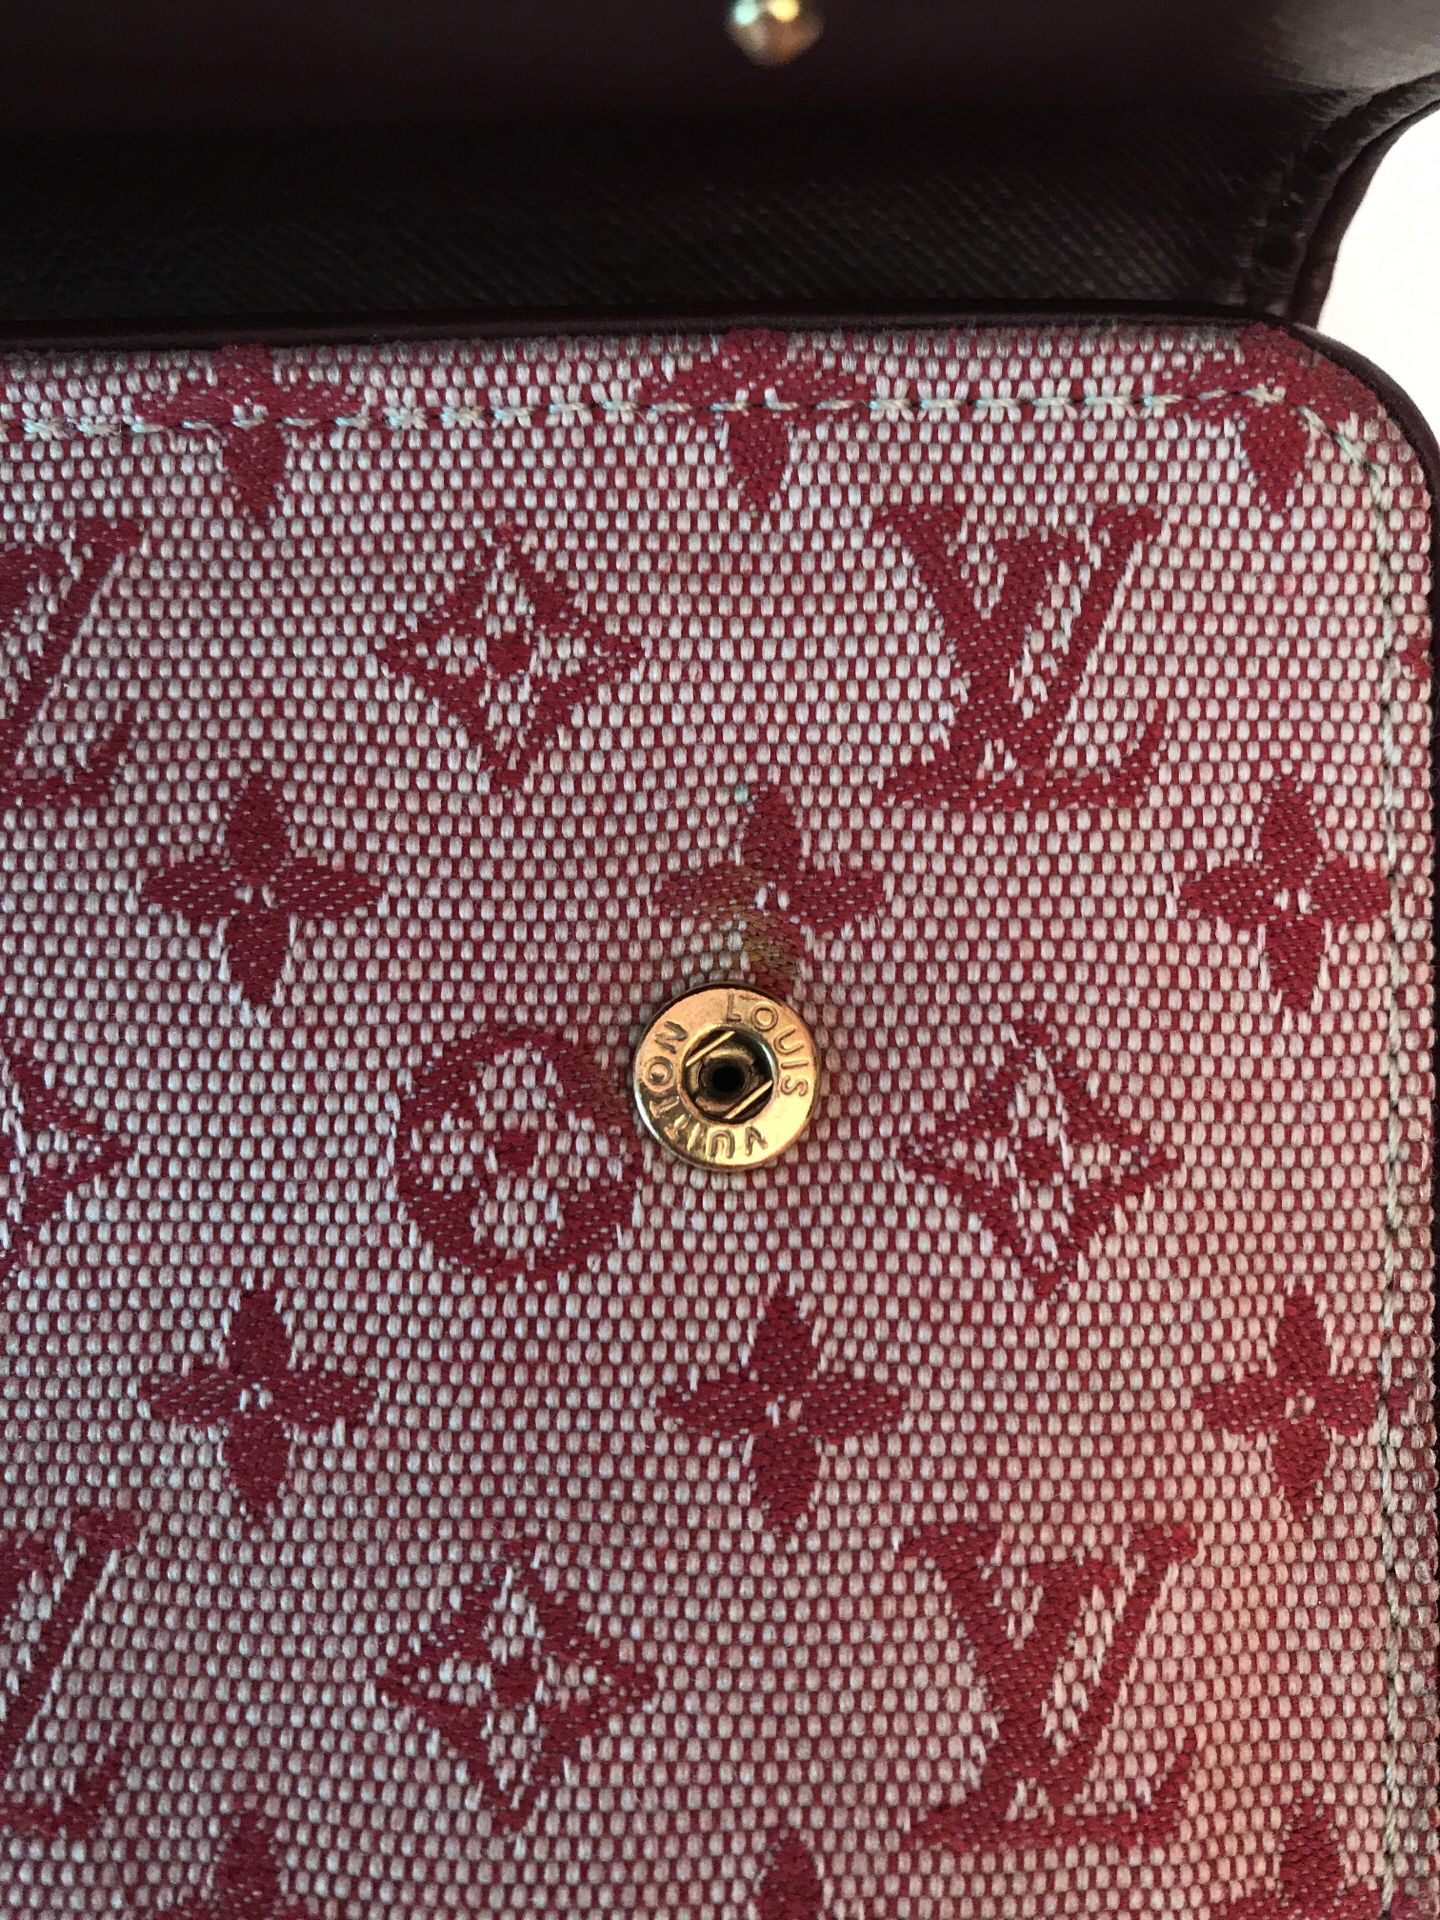 Pre-loved Louis Vuitton Zoé Wallet Monogram Empreinte Leather in Rose Poudre  for Sale in Tucson, AZ - OfferUp